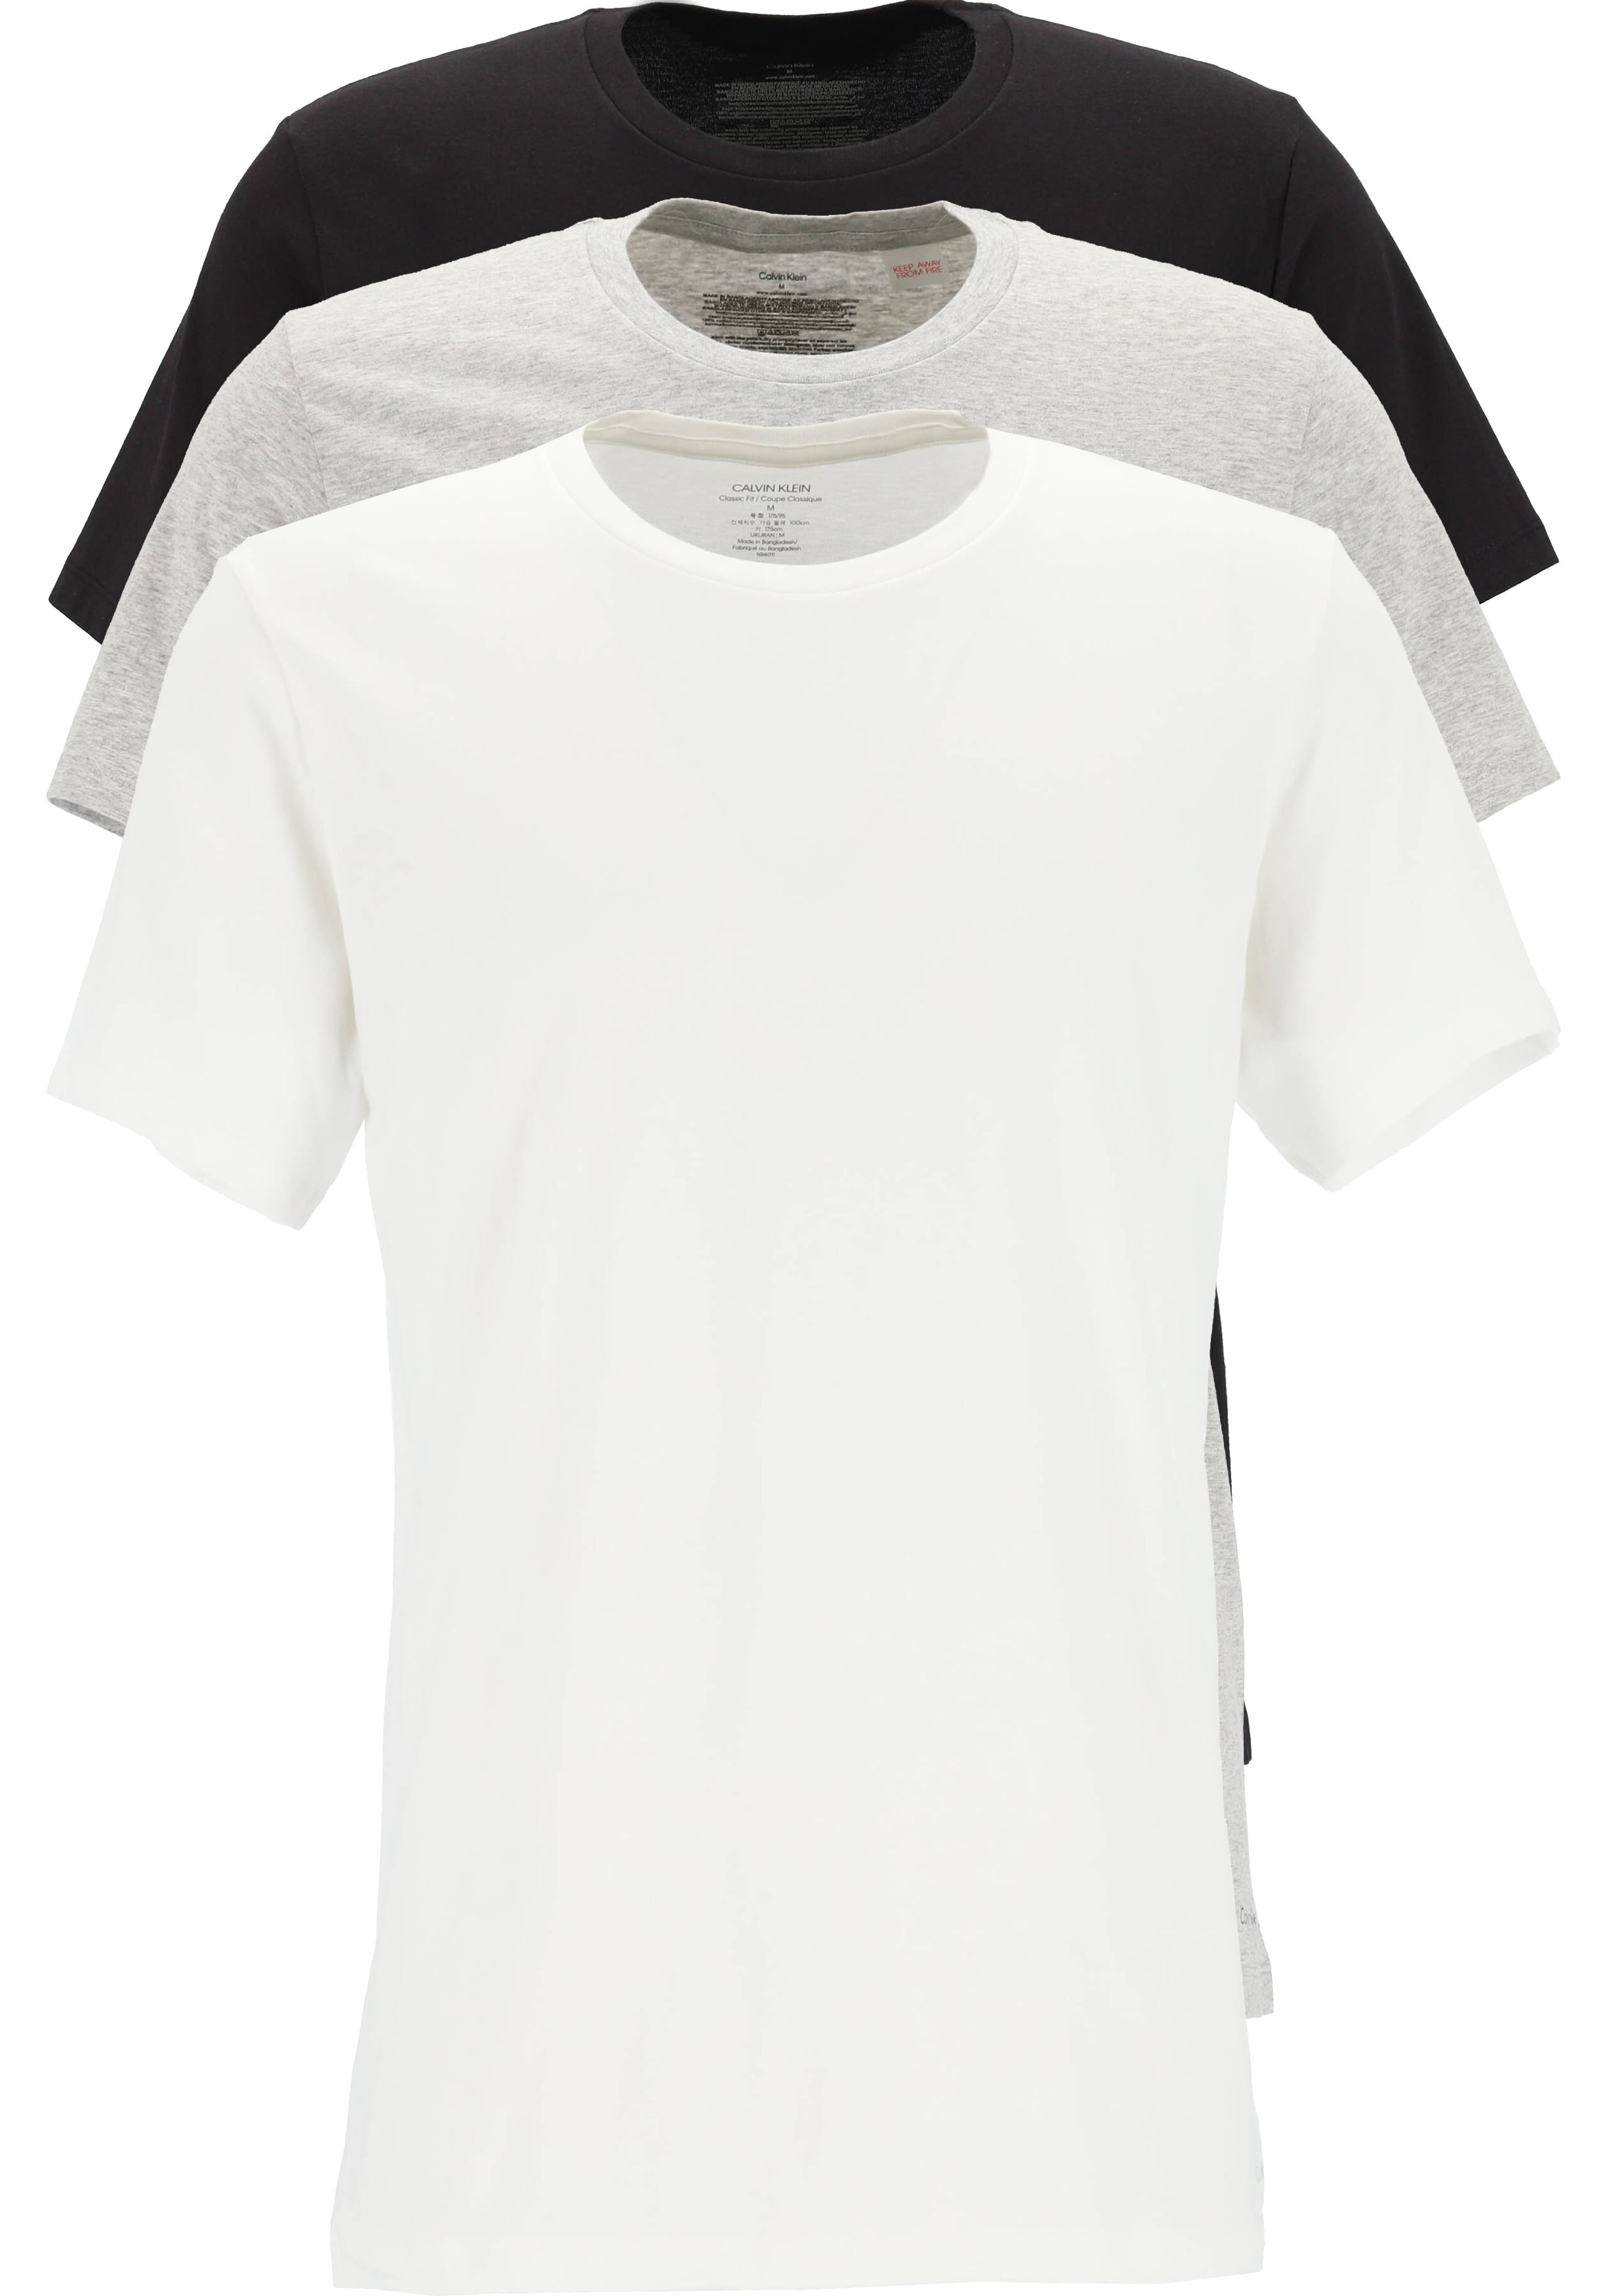 Rommelig Vorming Antagonisme Calvin Klein Cotton Classics crew neck T-shirt (3-pack), heren T-shirts...  - Zomer SALE tot 50% korting